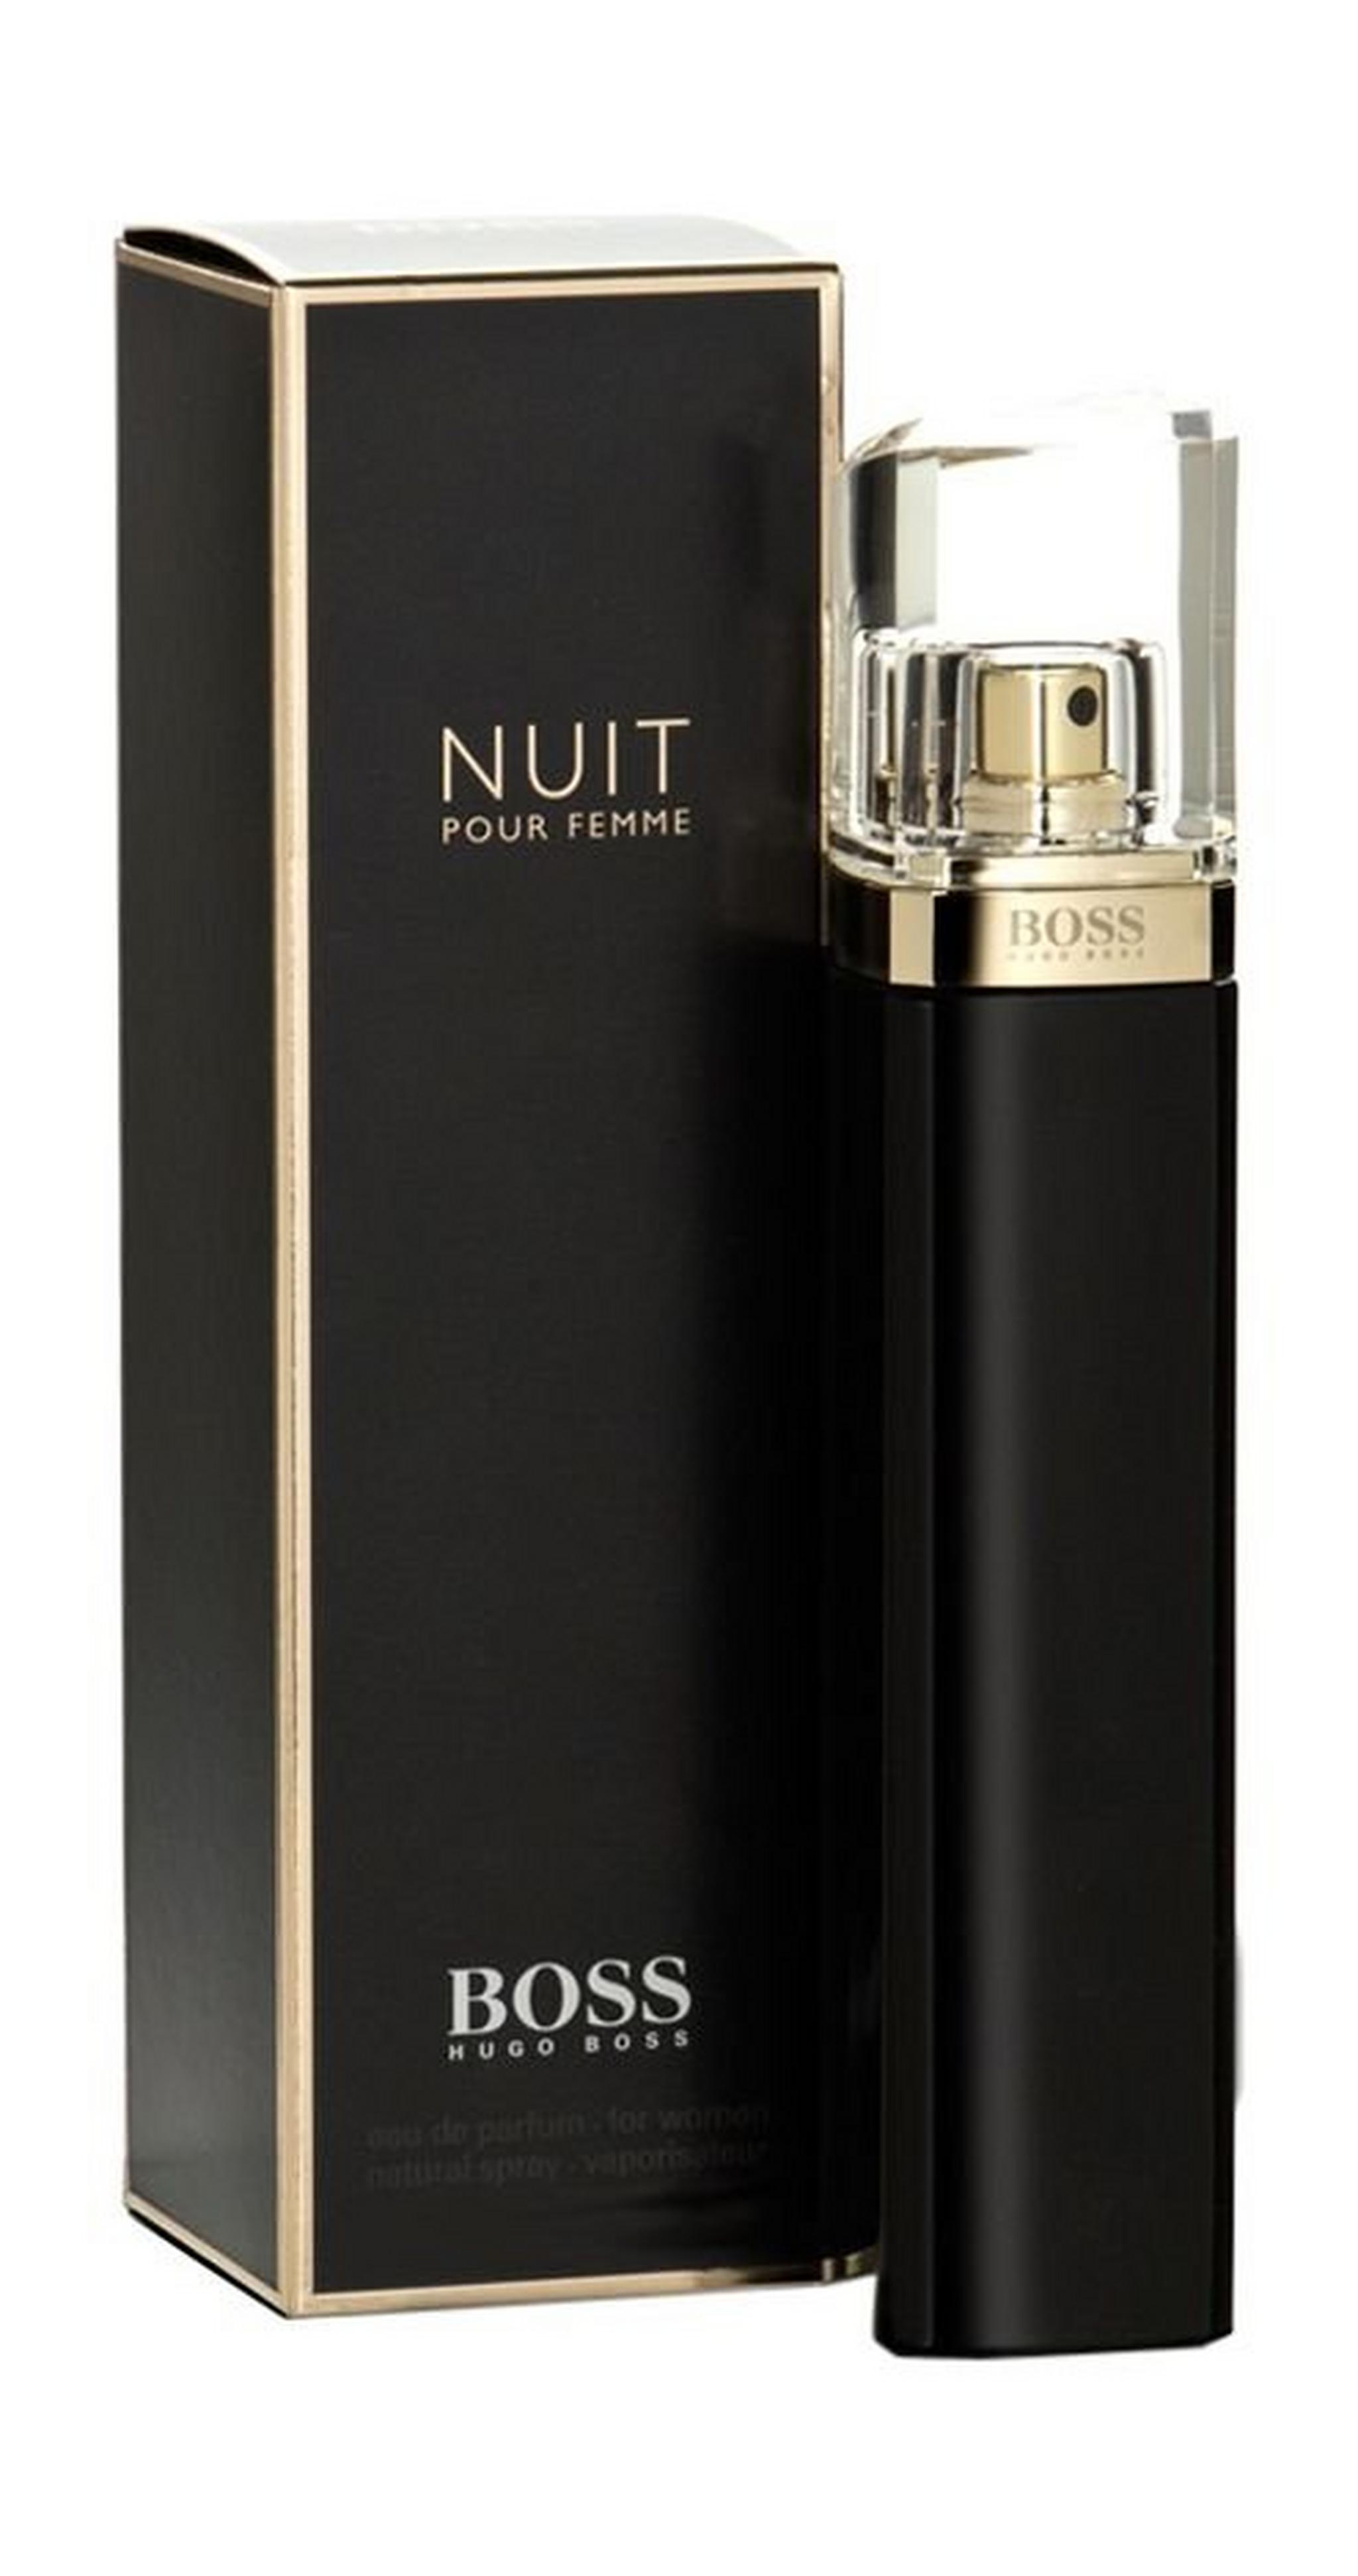 Hugo Boss Nuit For Women 75 ml Eau de Parfum